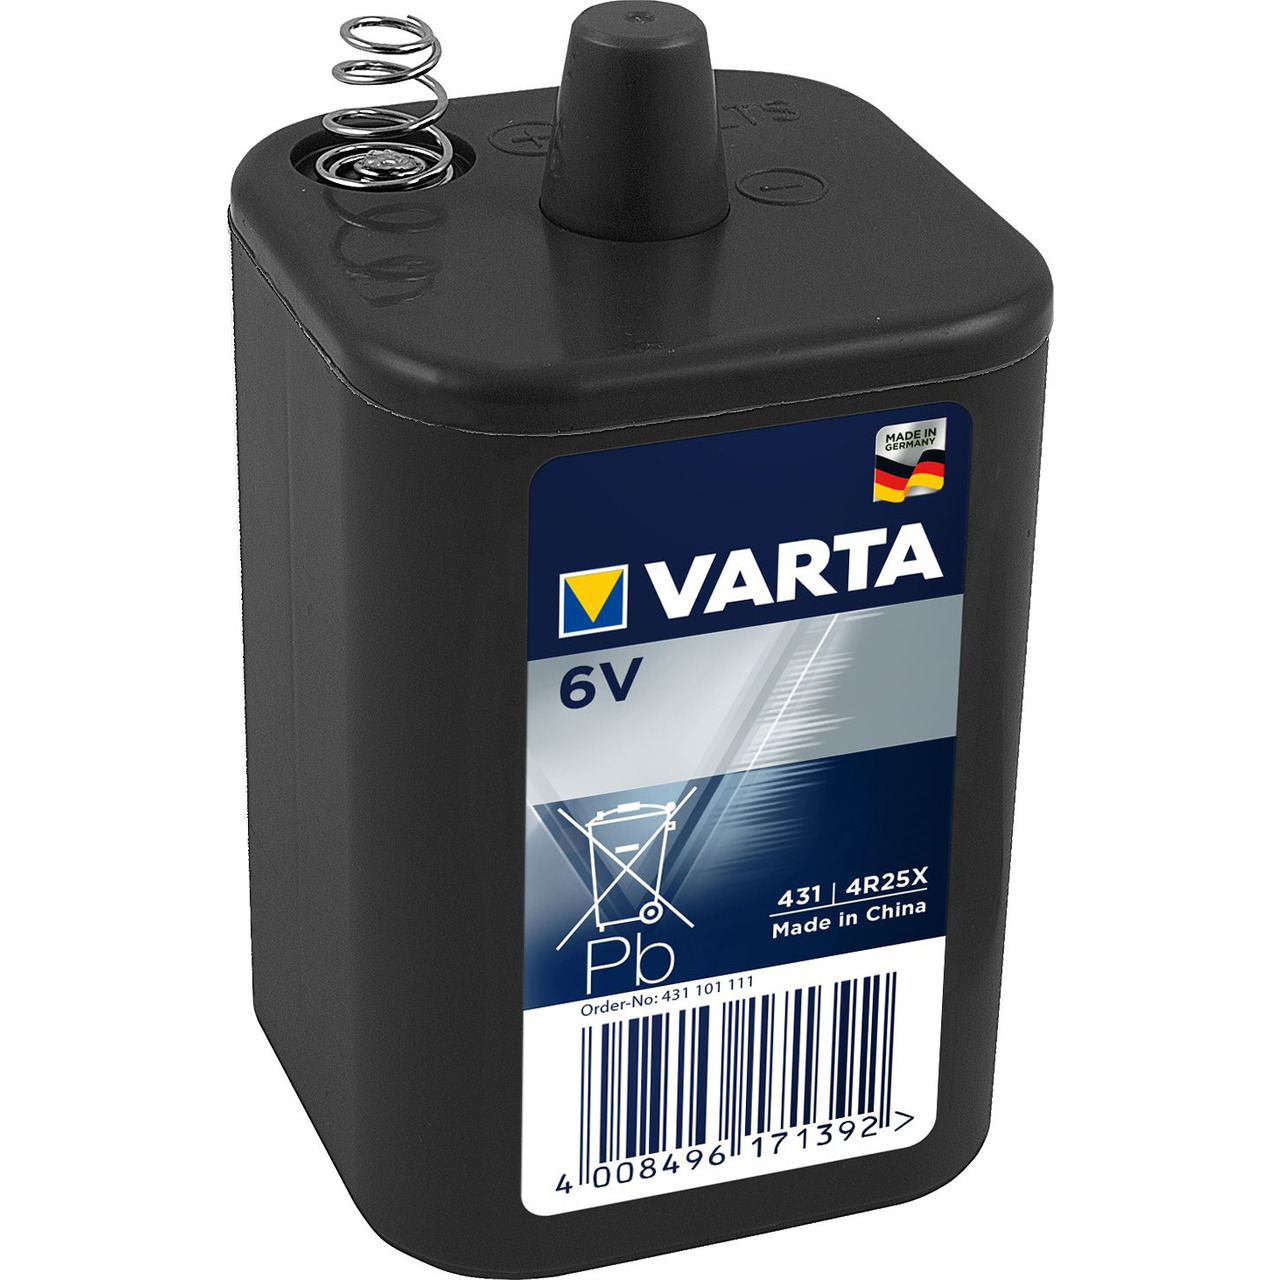 VARTA Professional Blockbatterie 431-4R25X- 6 V